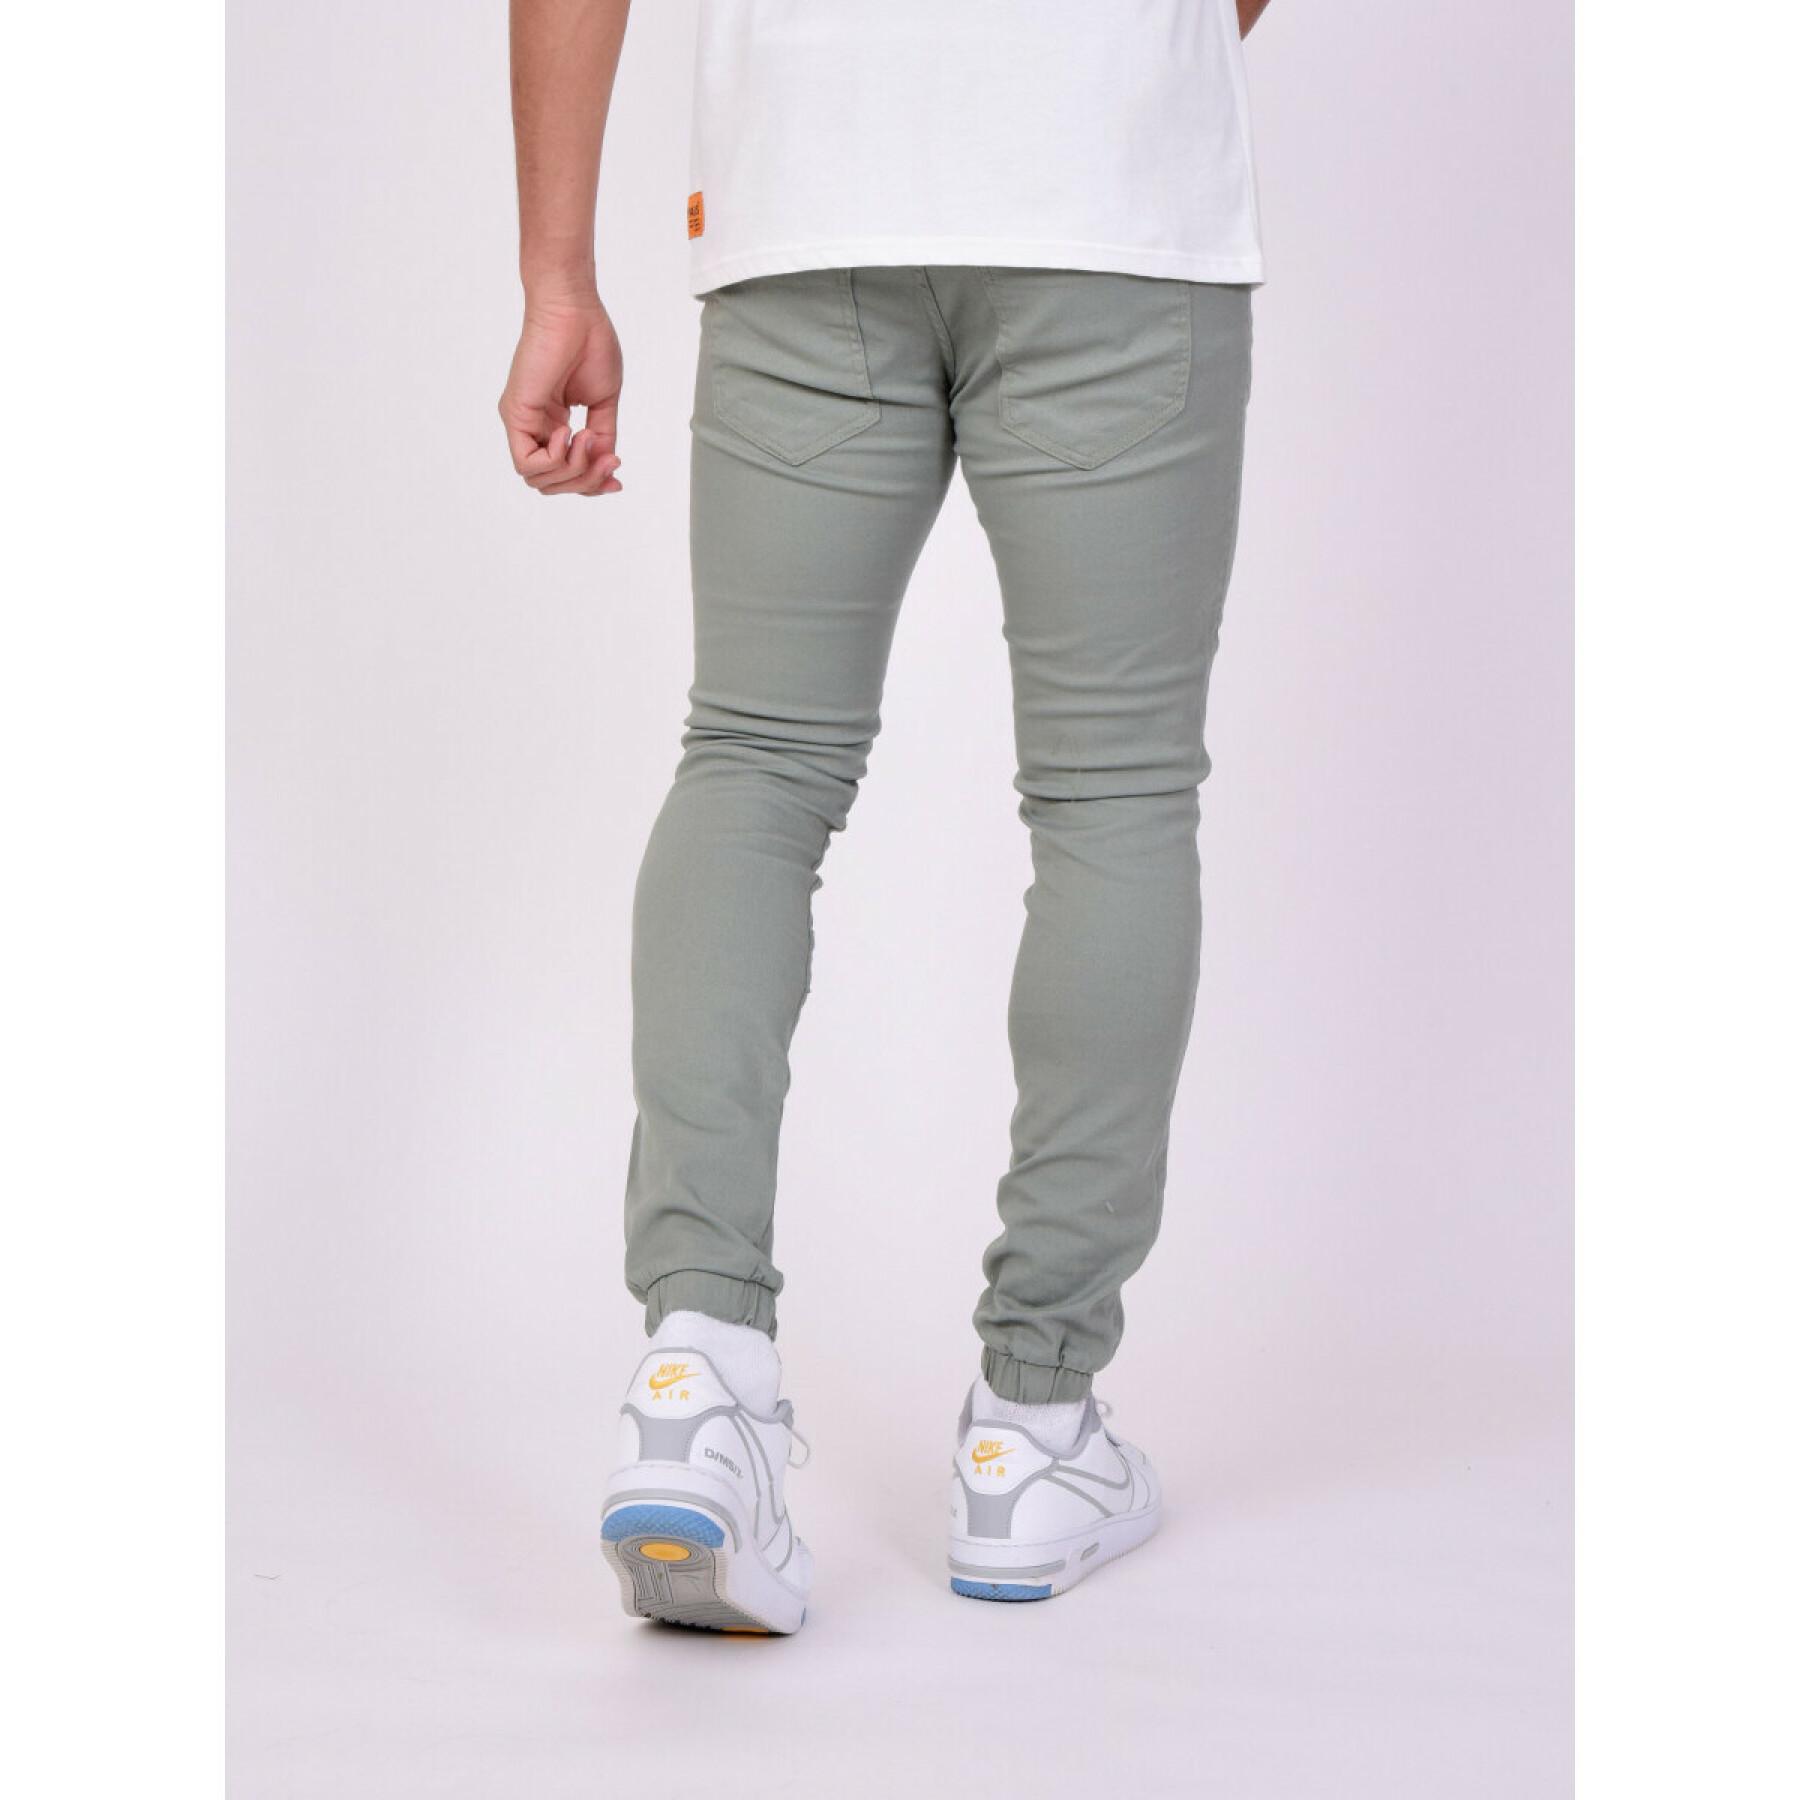 Basic skinny pants with visible seams Project X Paris